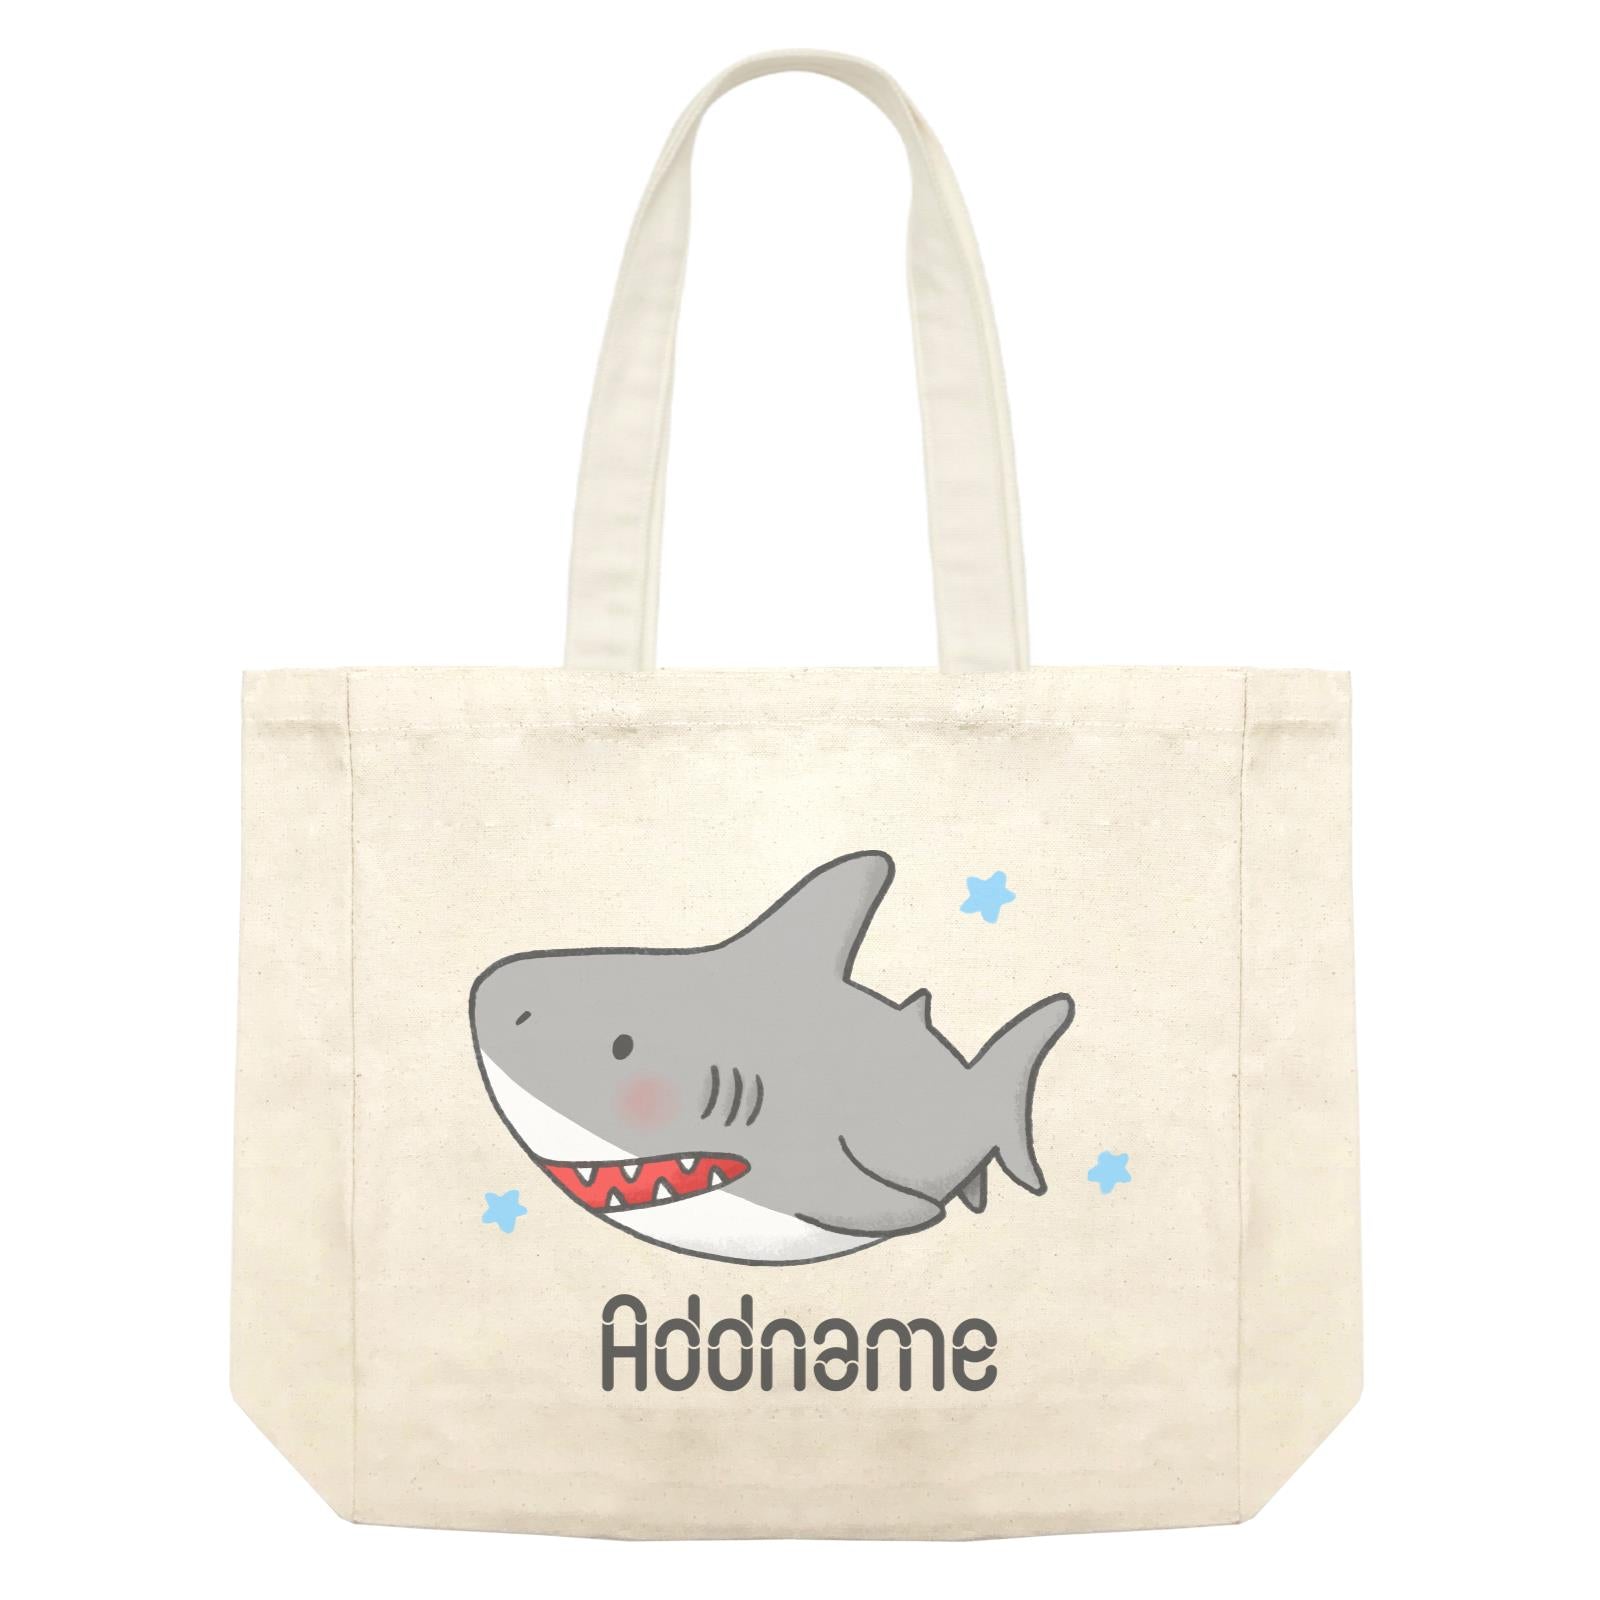 Cute Hand Drawn Style Shark Addname Shopping Bag